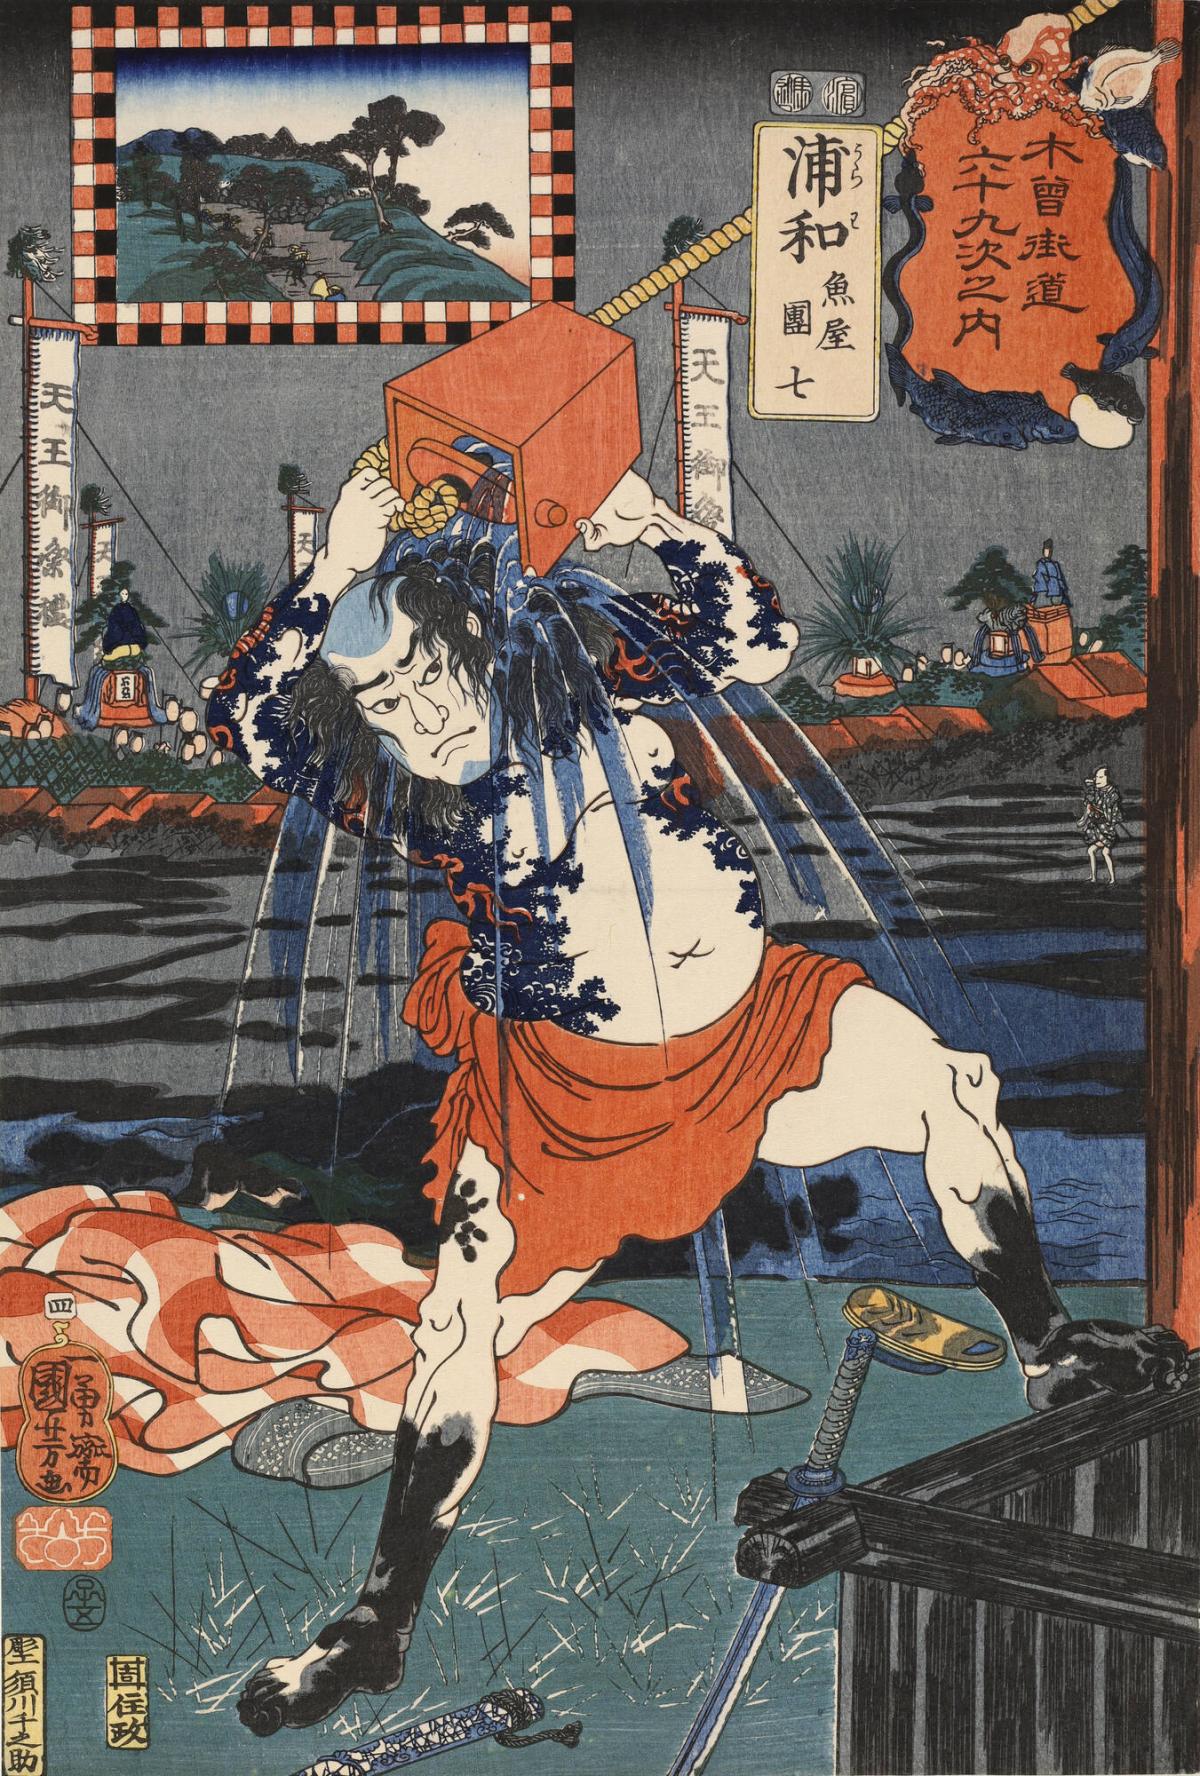 Urawa: Danshichi Kurobei, the Fishmonger, Washing Himself after the Murder in the Muddy Field, no. 4 from the series The Sixty-nine Stations of the Kisokaidō